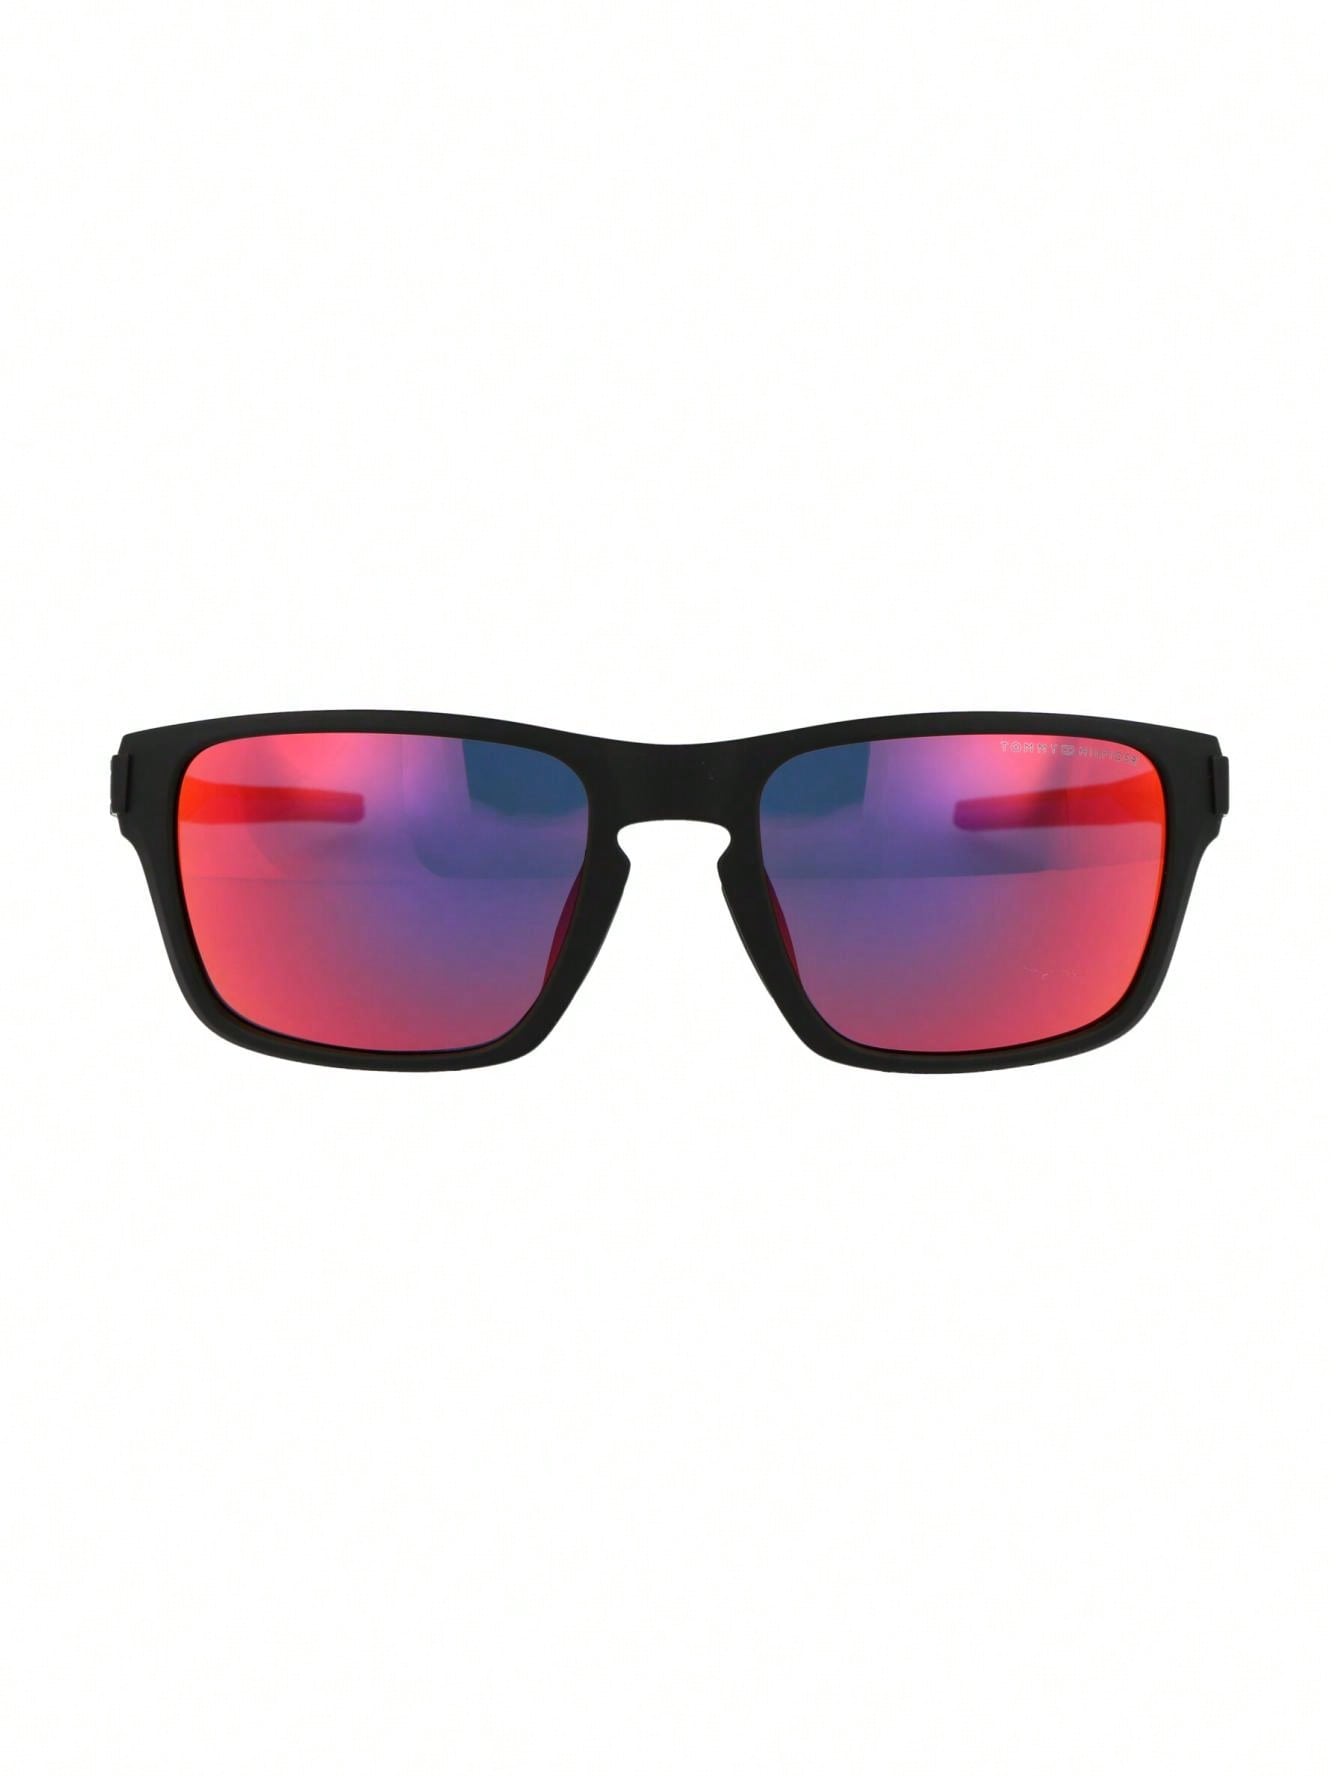 Мужские солнцезащитные очки Tommy Hilfiger DECOR TH1952S0VKPL, многоцветный солнцезащитные очки tommy hilfiger мультиколор